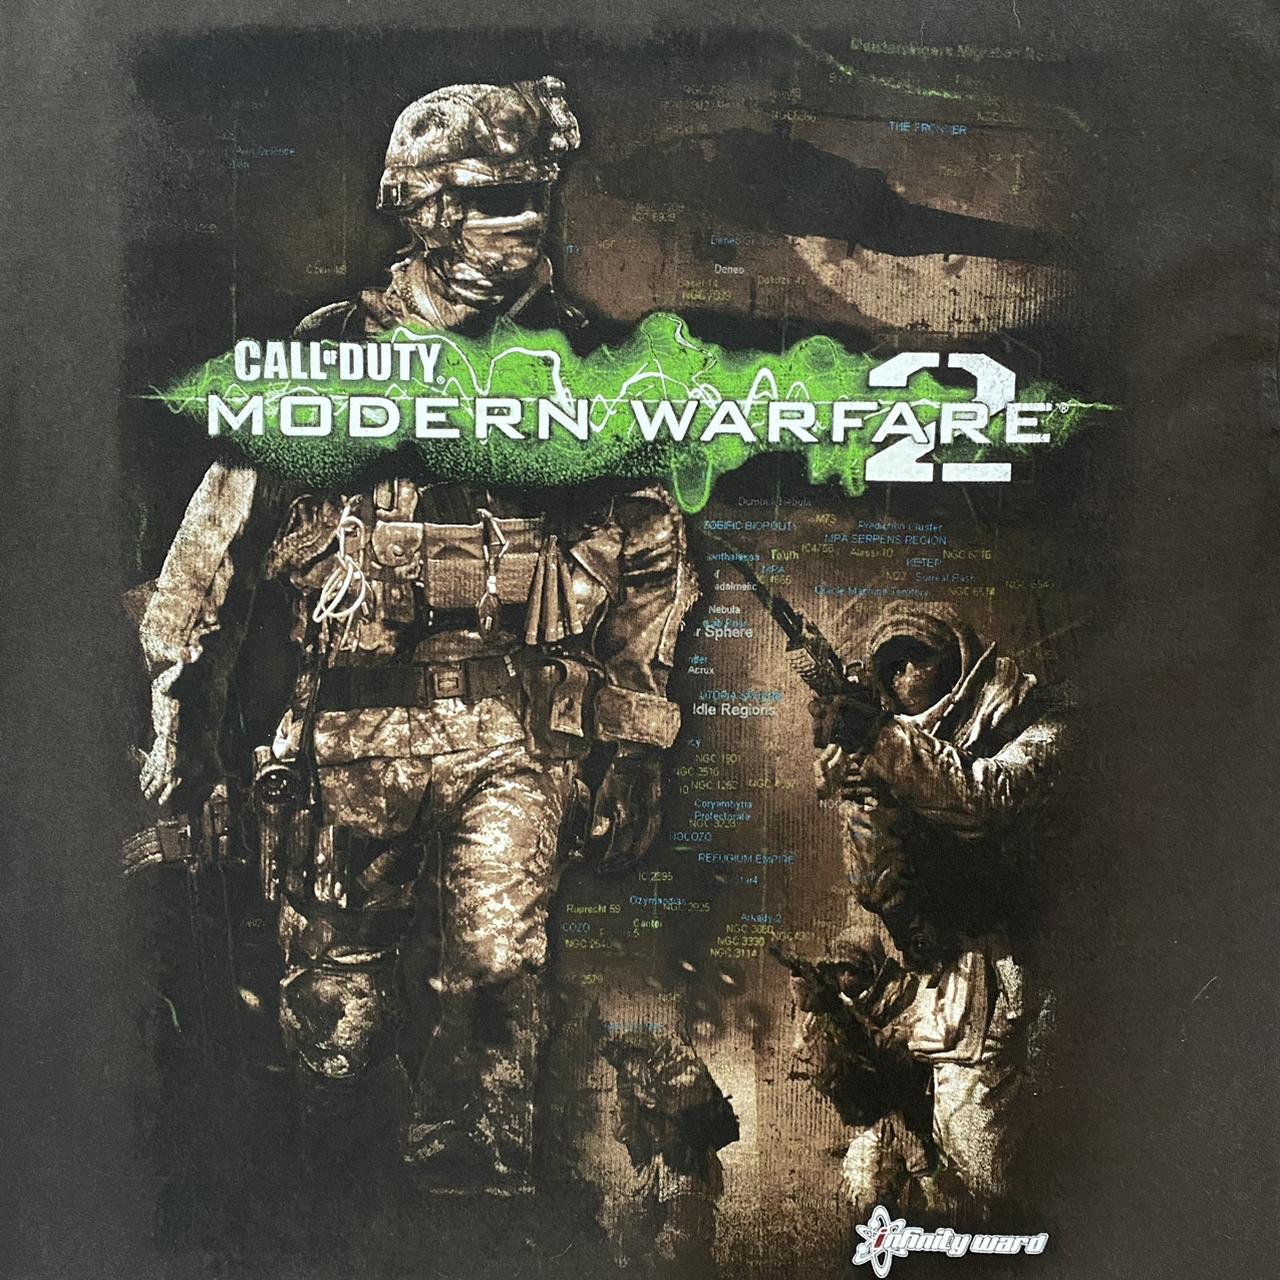 Call of duty modern warefare 2 promo t-shirt.... - Depop